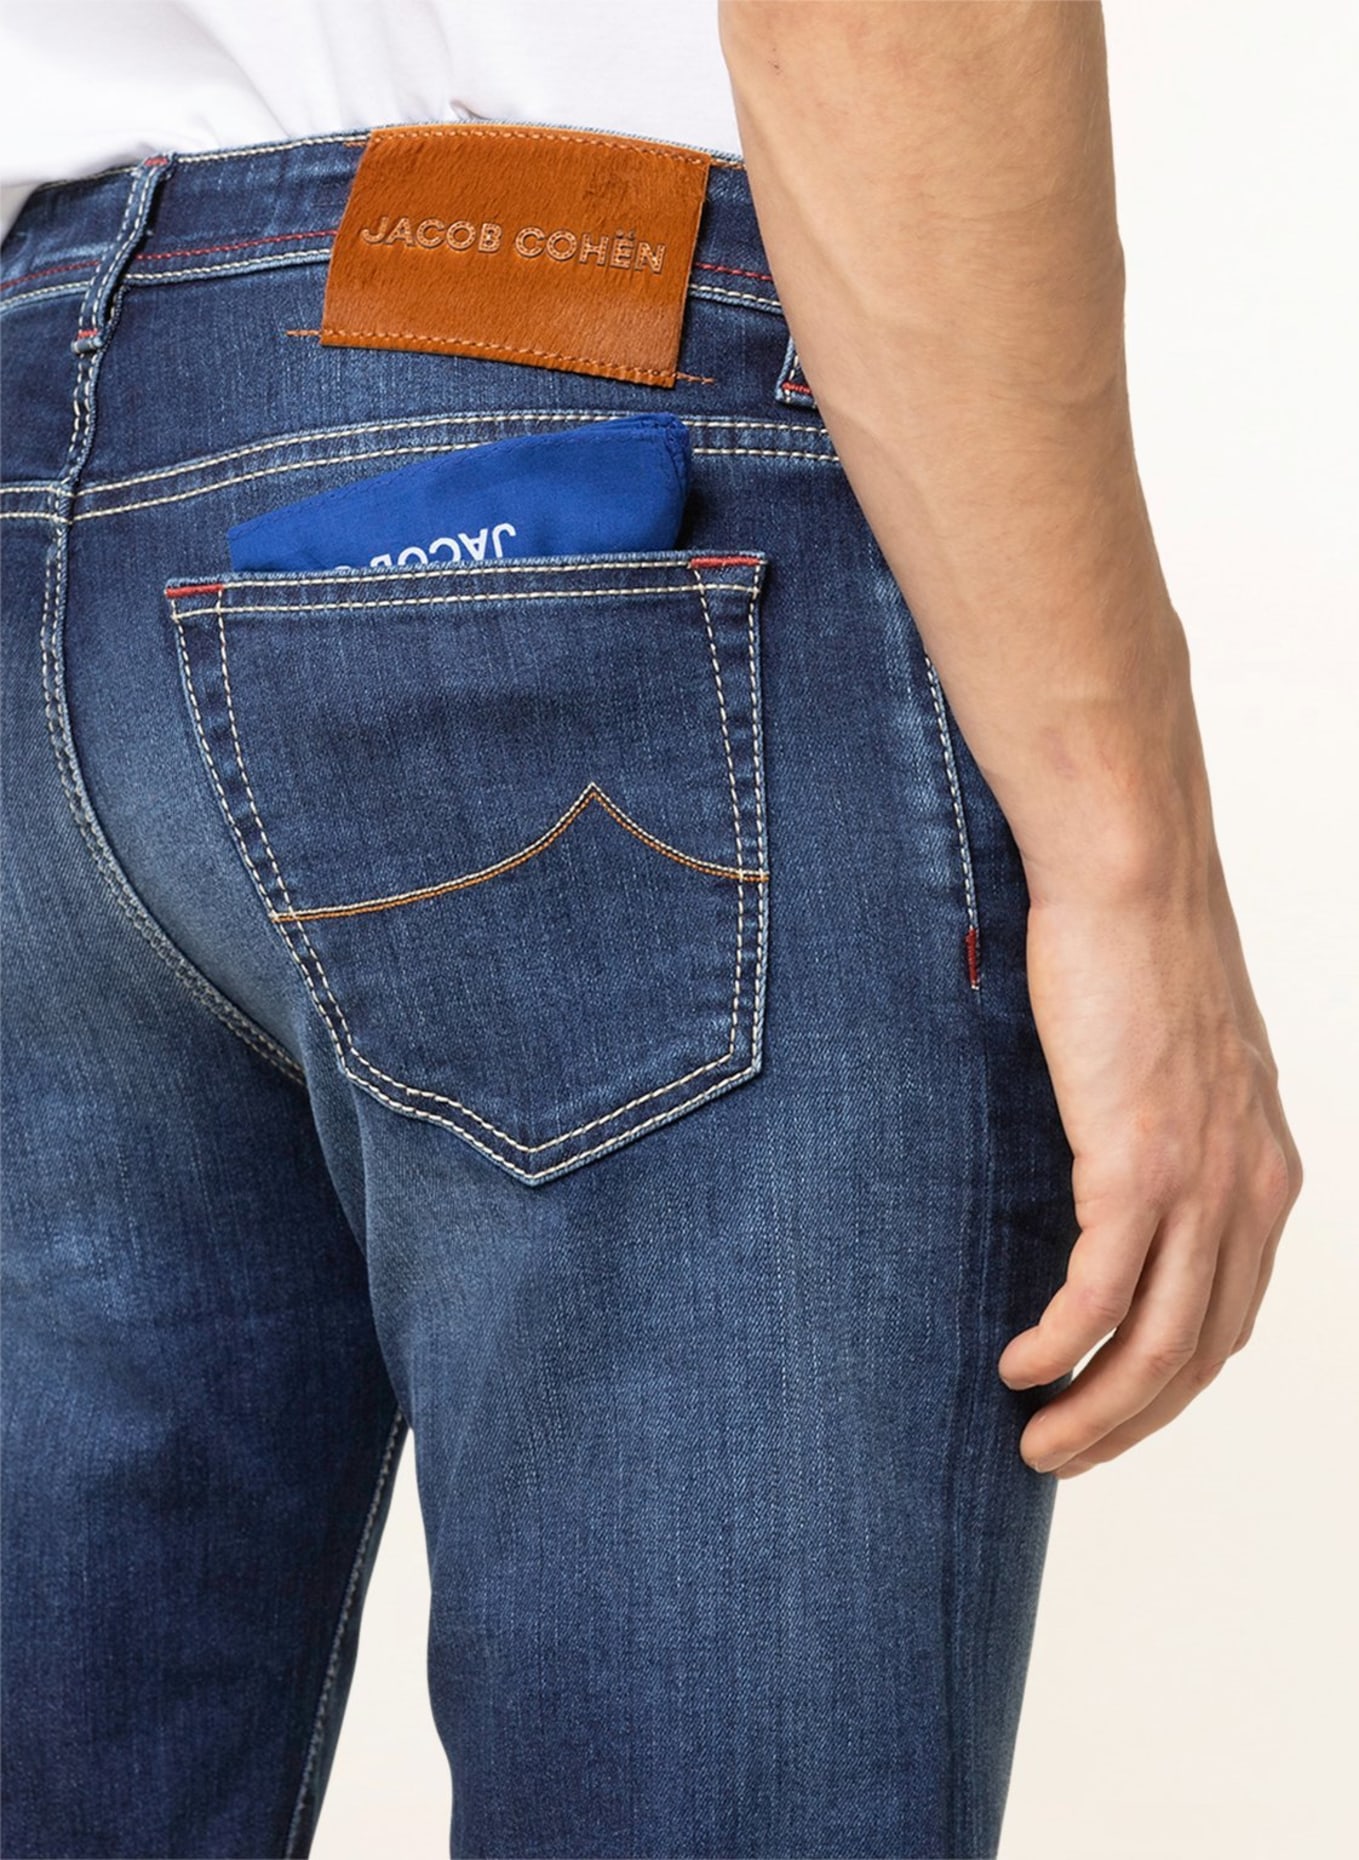 JACOB COHEN Jeans BARD Slim Fit, Farbe: 094D Medium Dark Stone Wash (Bild 5)